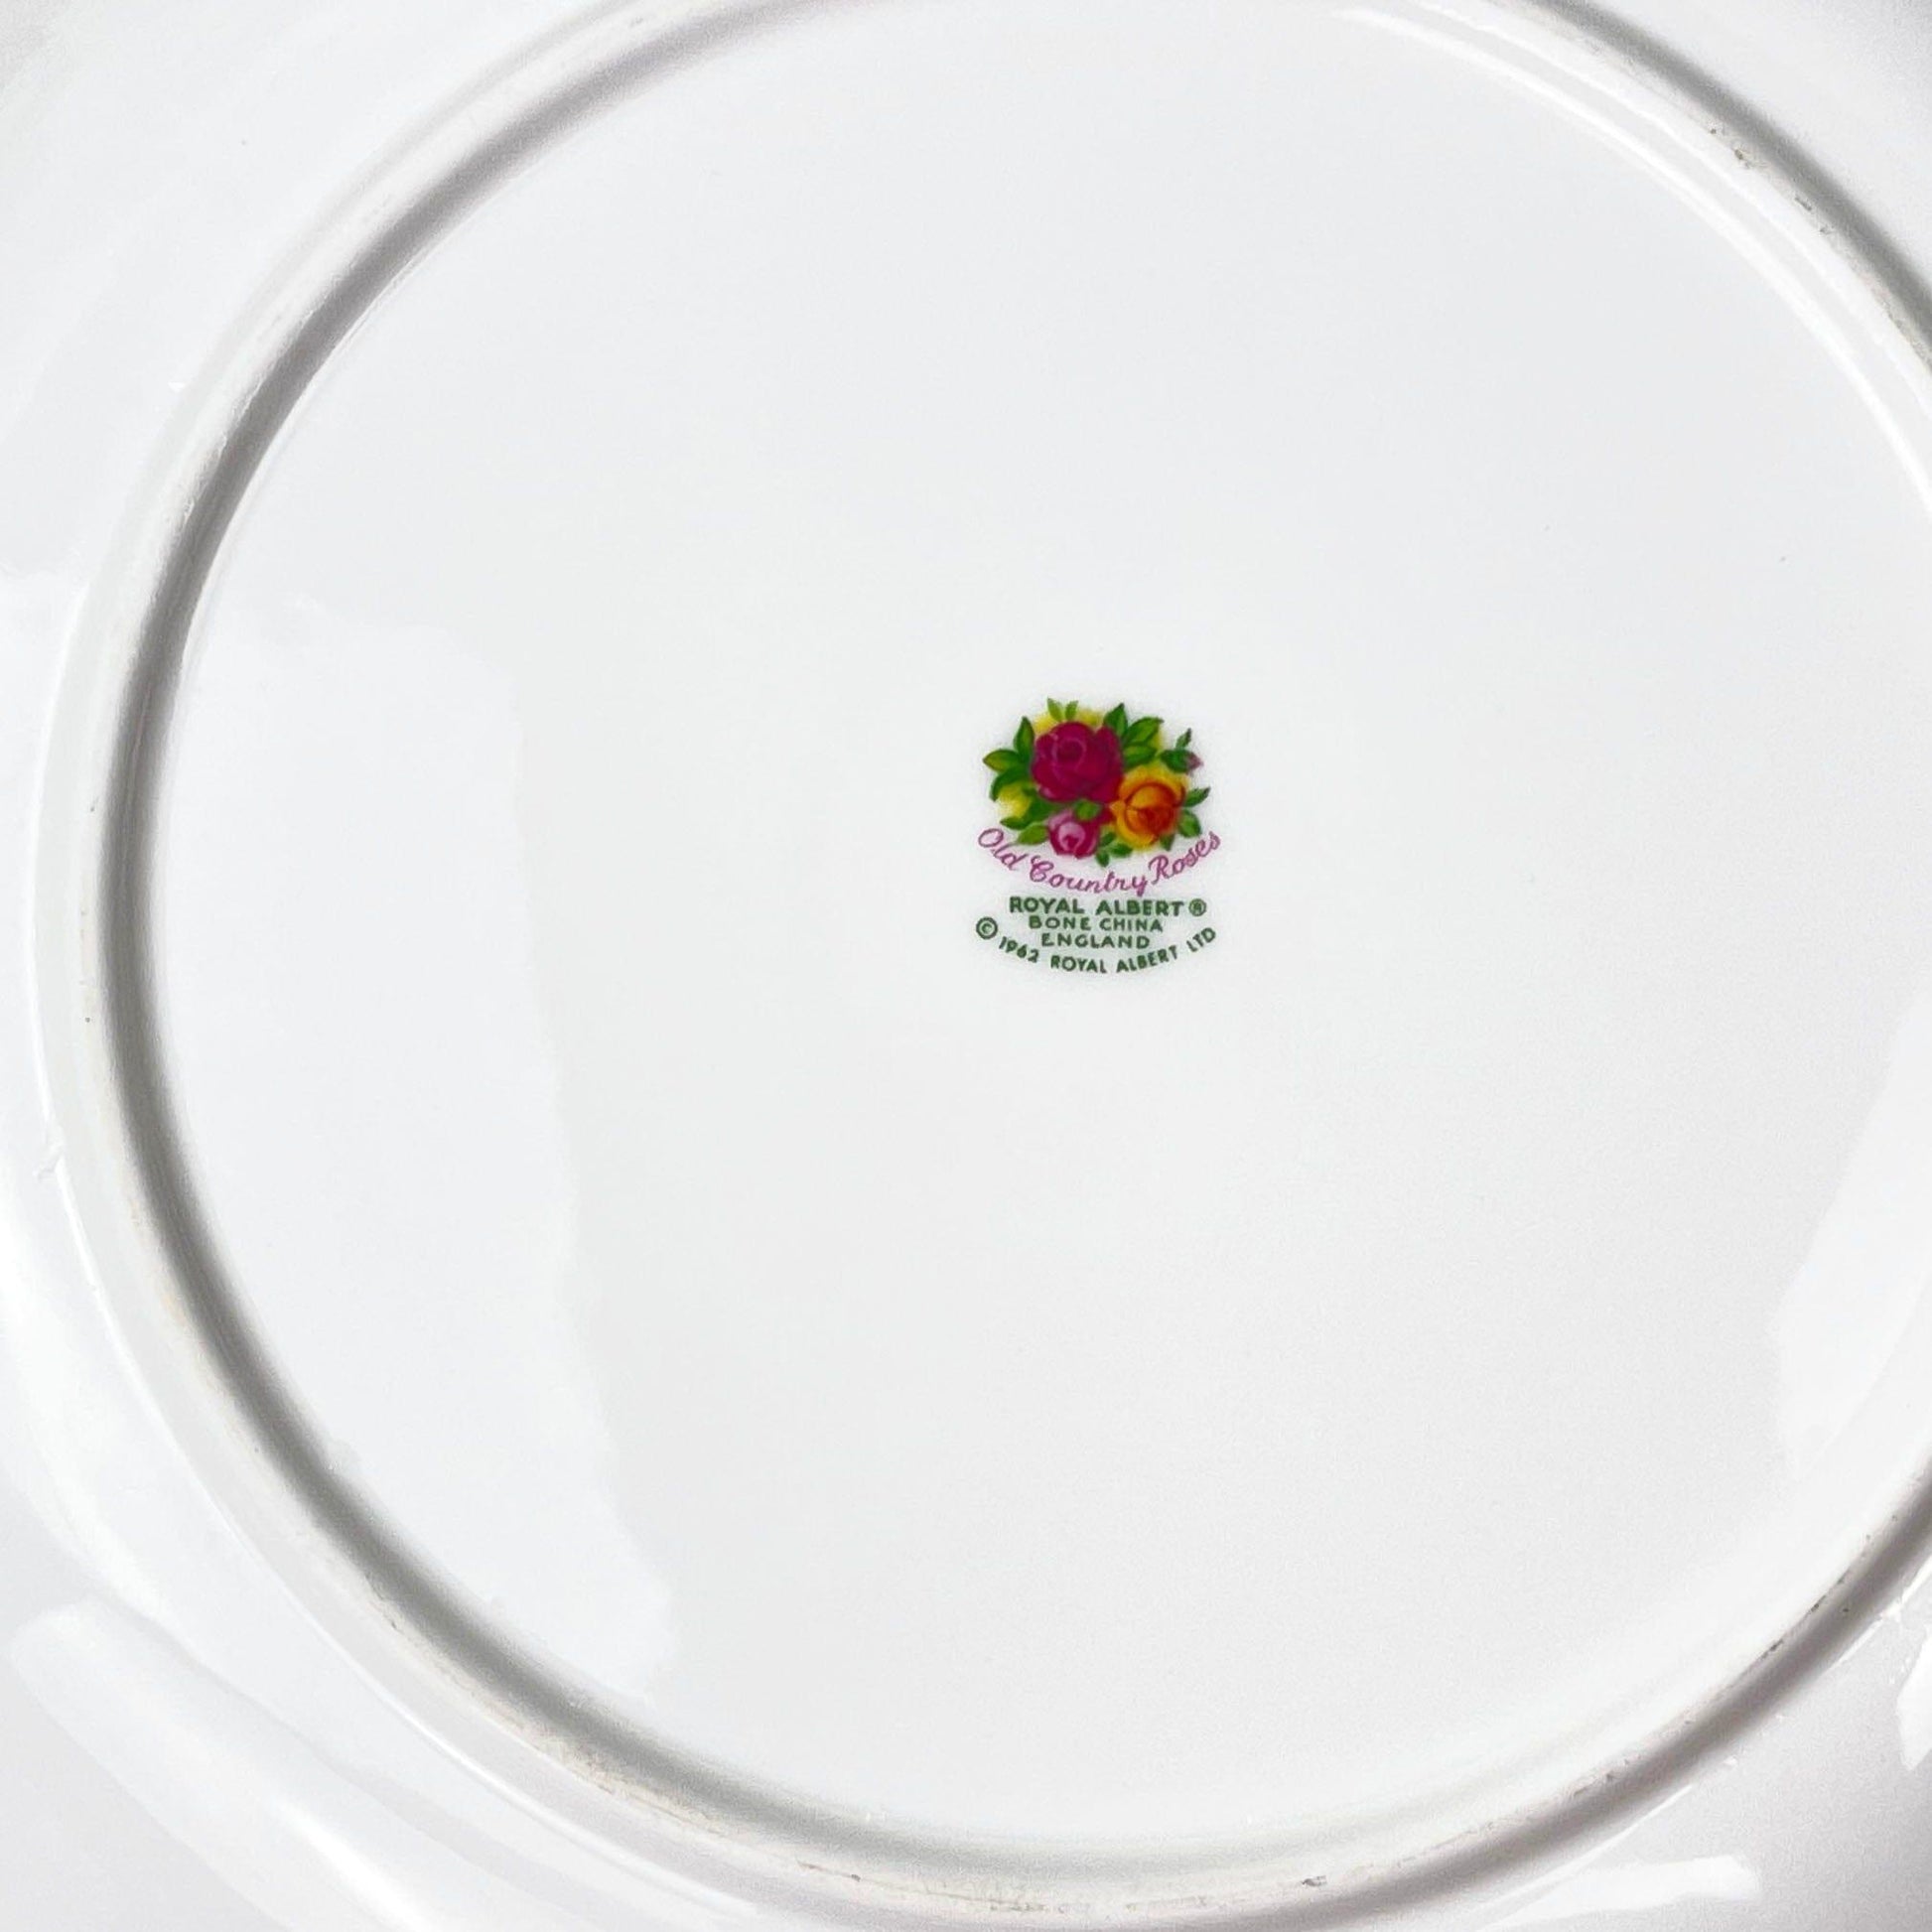 Royal Albert Old Country Roses Tabbed Cake Plate.